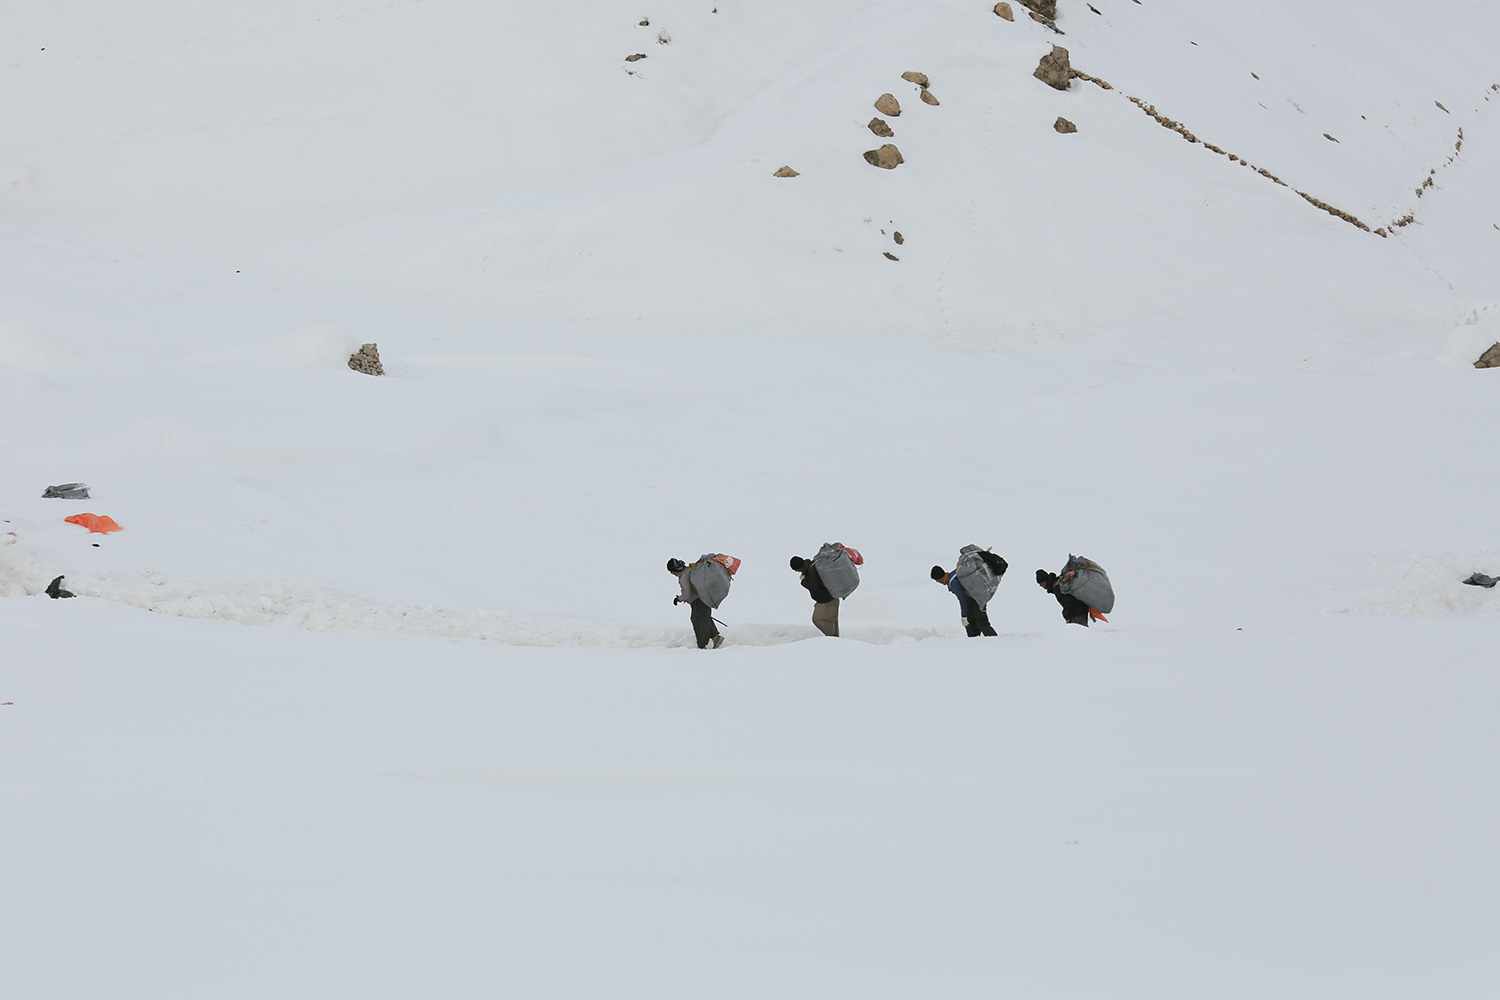 Four men trudge through snow in the middle distance (photo: Konstantin Novakovic)